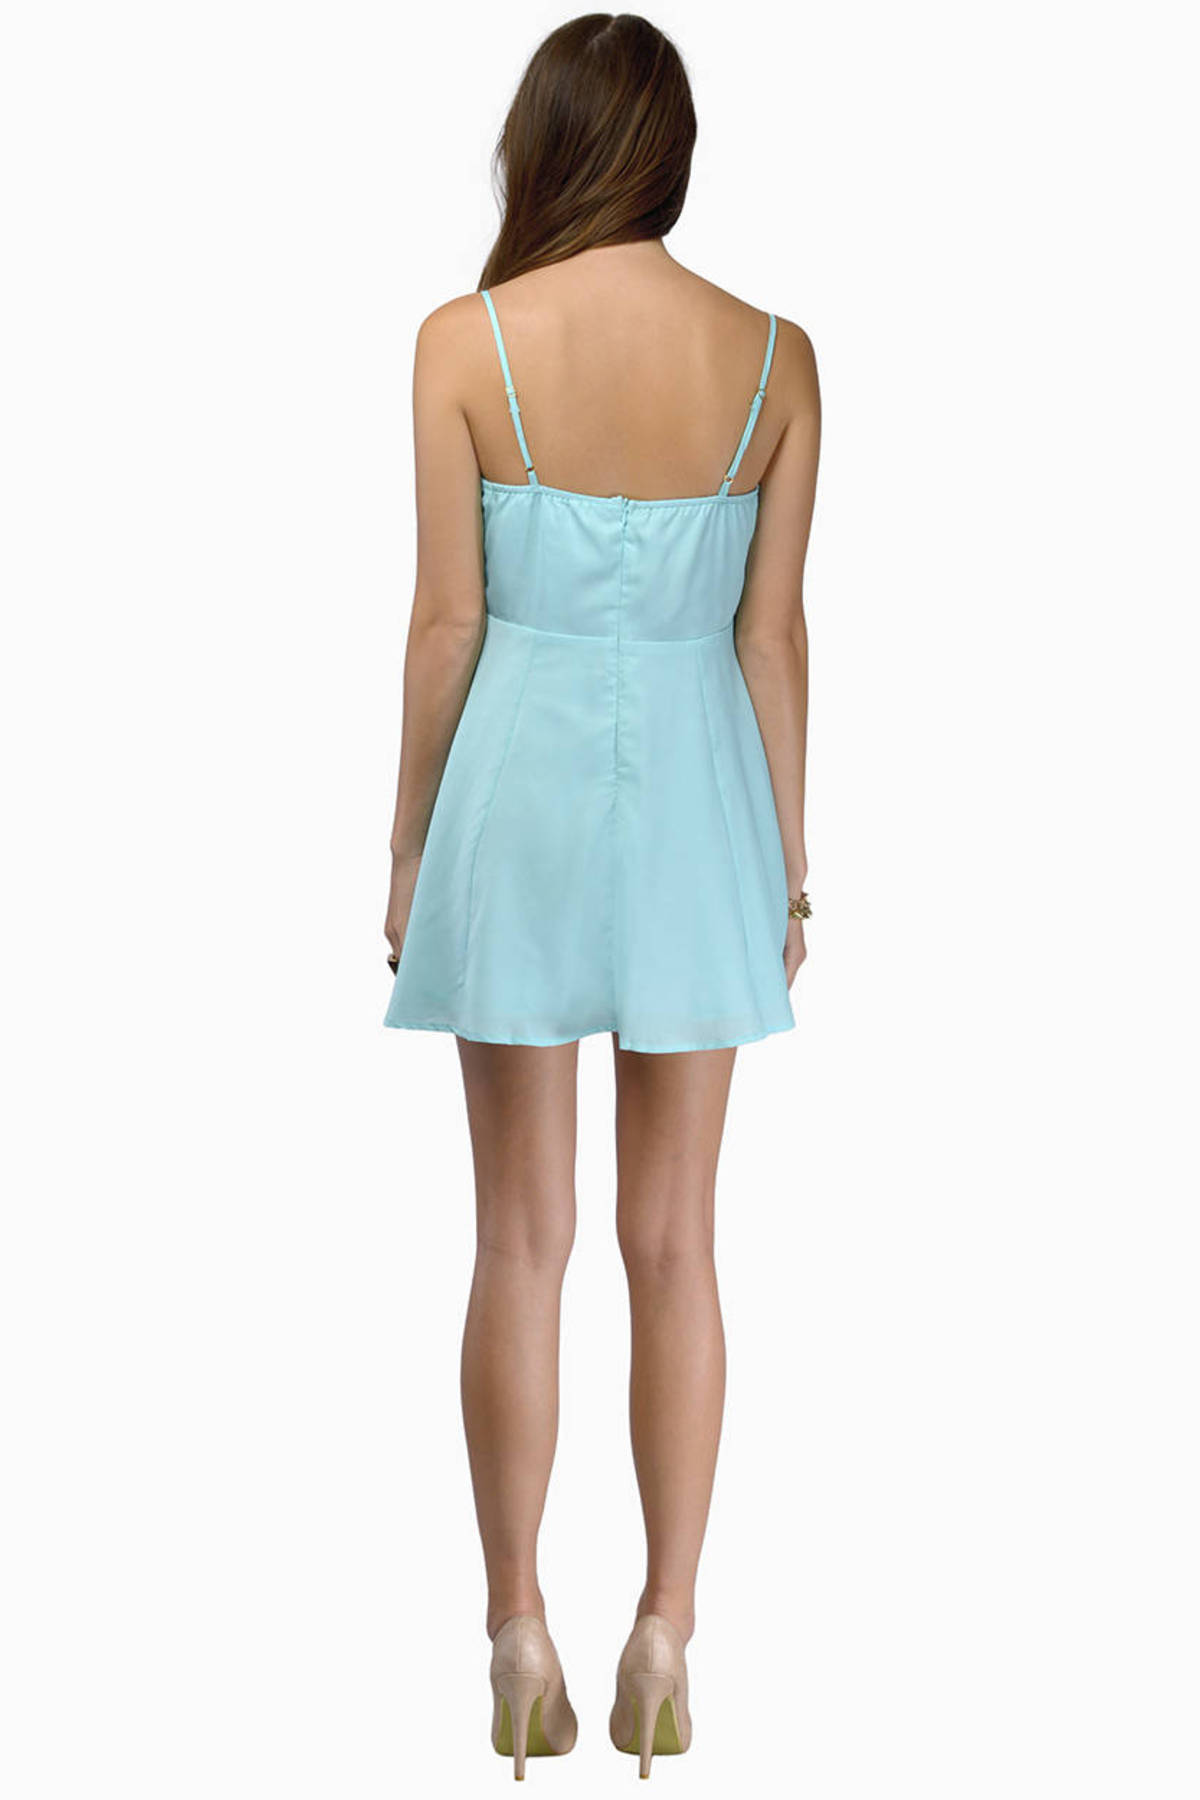 Minimal Exposure Cami Dress in Mint - $62 | Tobi US